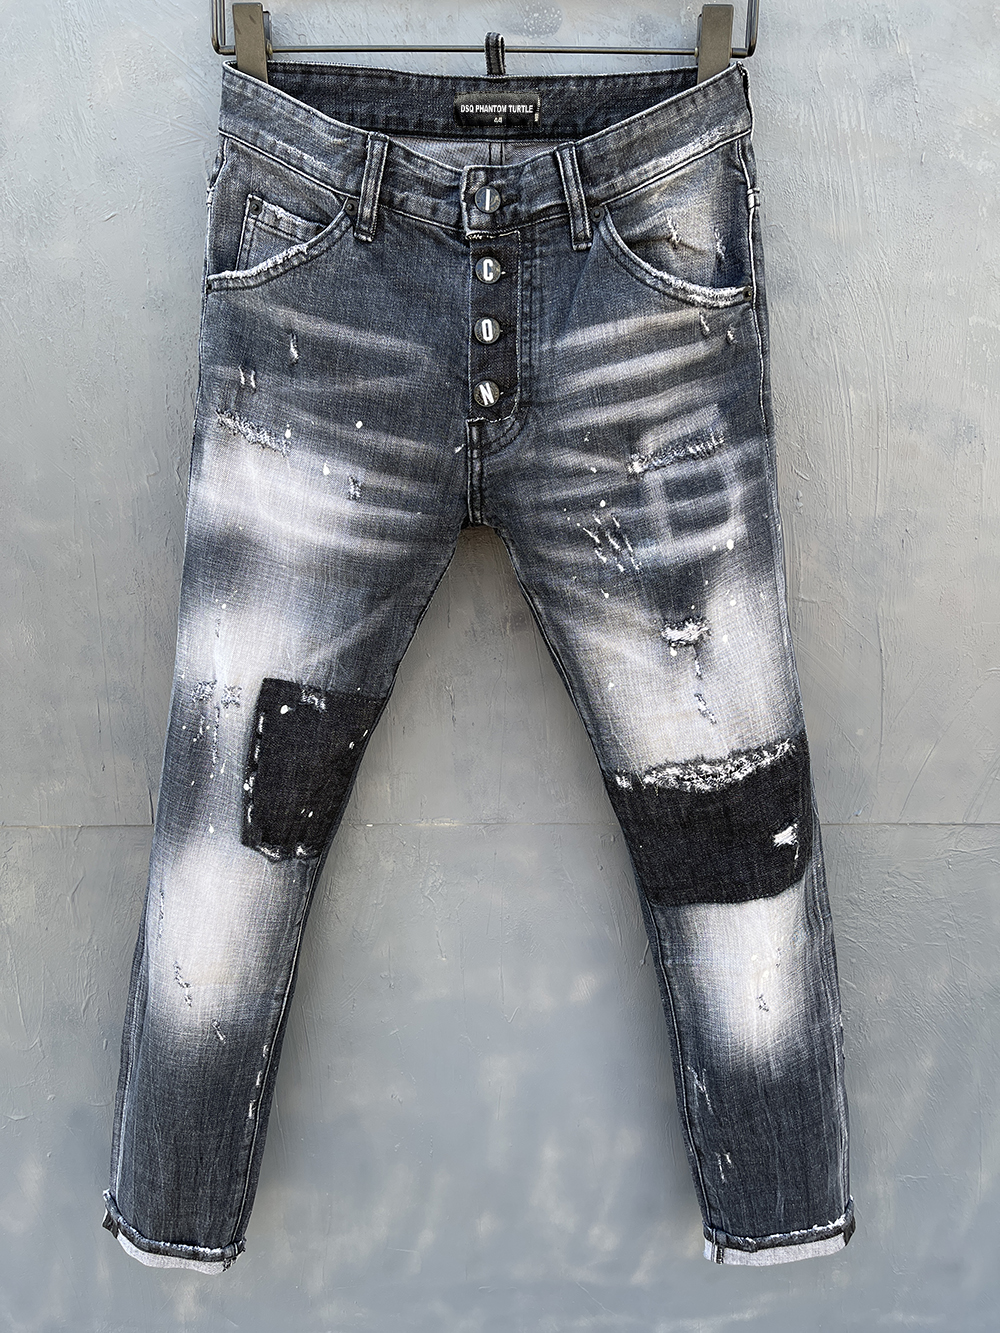 

DSQ PHANTOM TURTLE Classic Fashion Man Jeans Hip Hop Rock Moto Mens Casual Design Ripped Jeans Distressed Skinny Denim Biker DSQ Jeans 1042, As picture